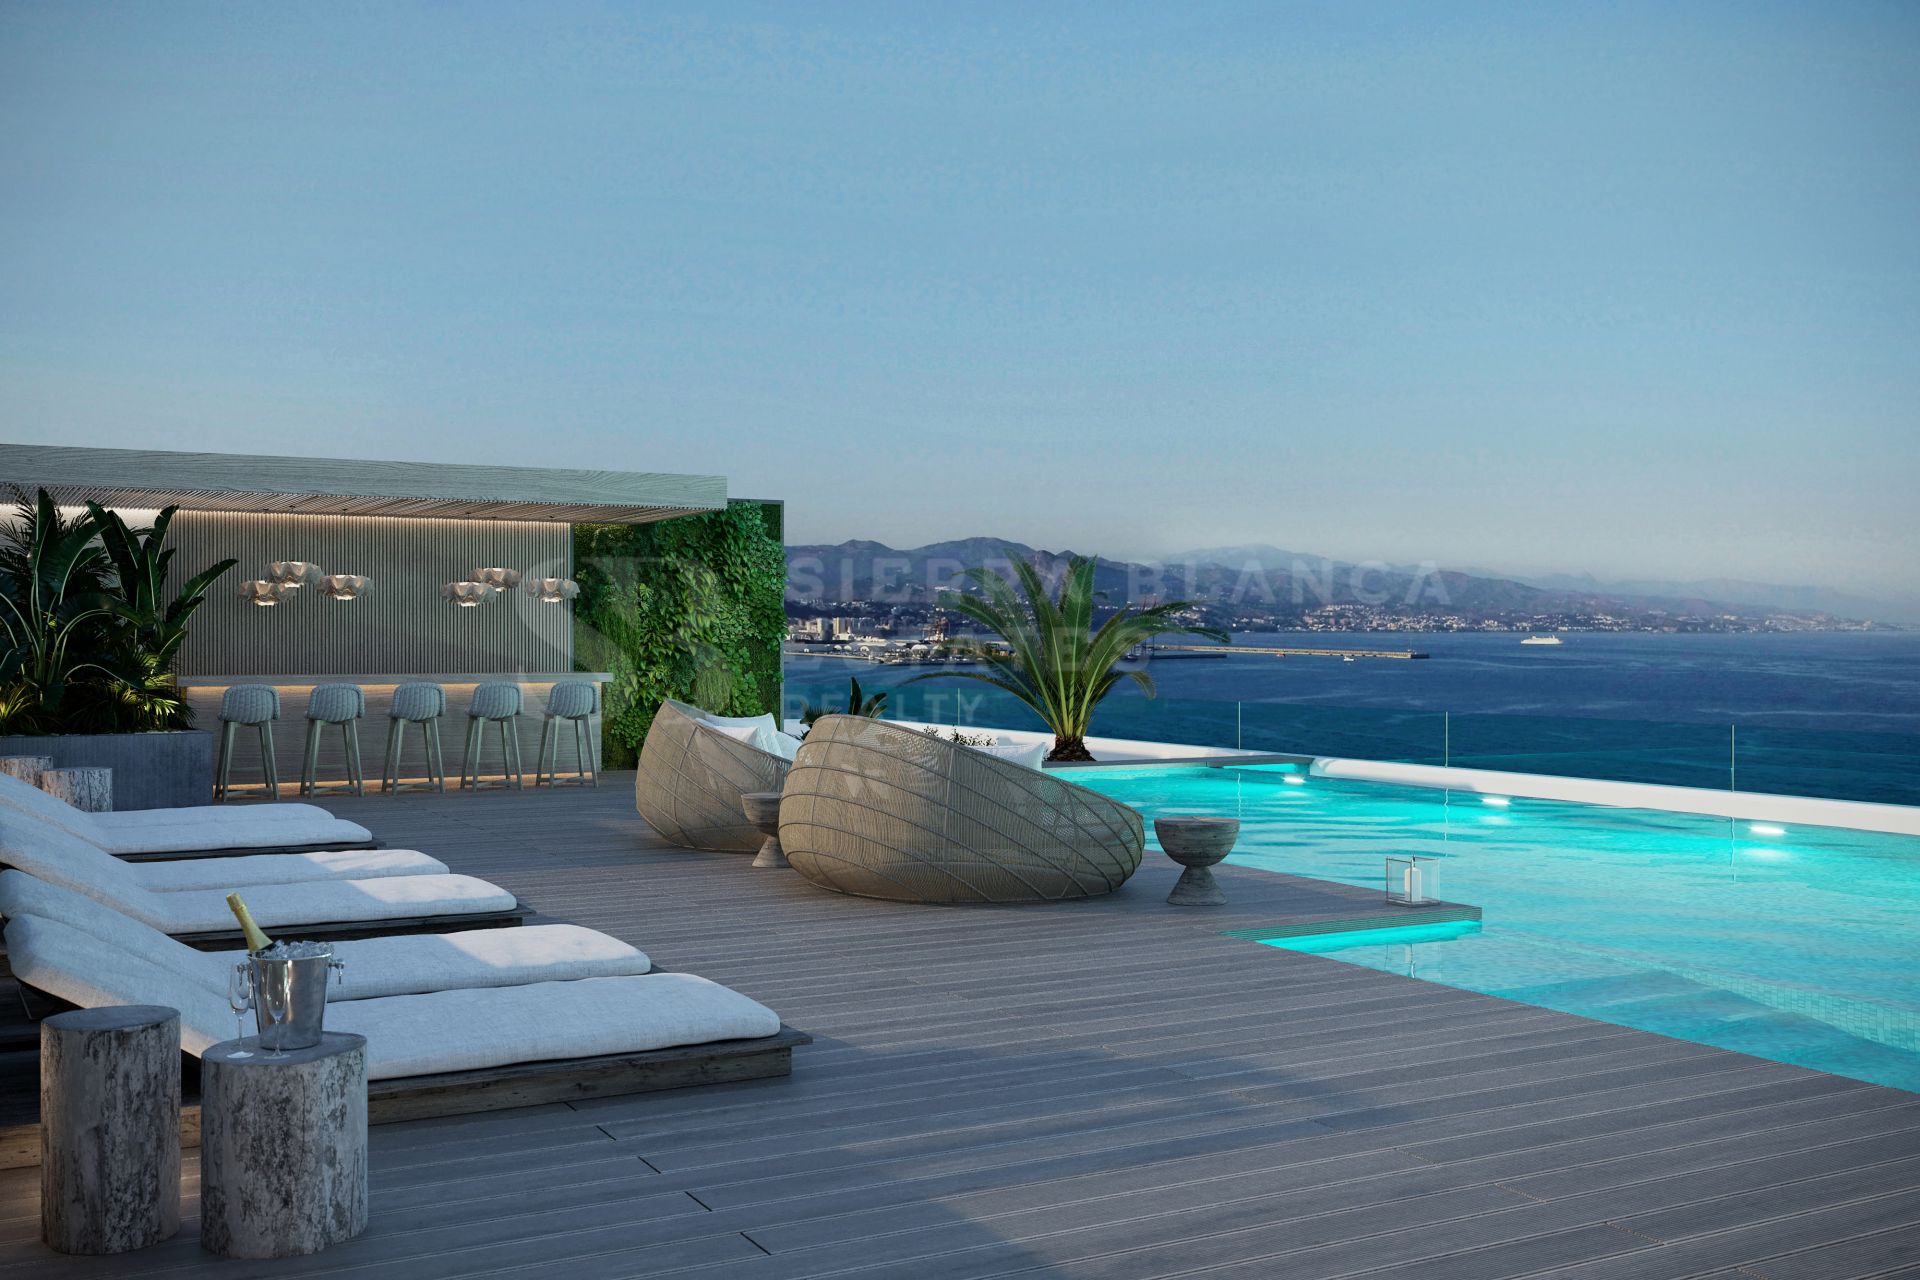 Sierra Blanca Tower - Appartements de luxe en bord de mer à Malaga